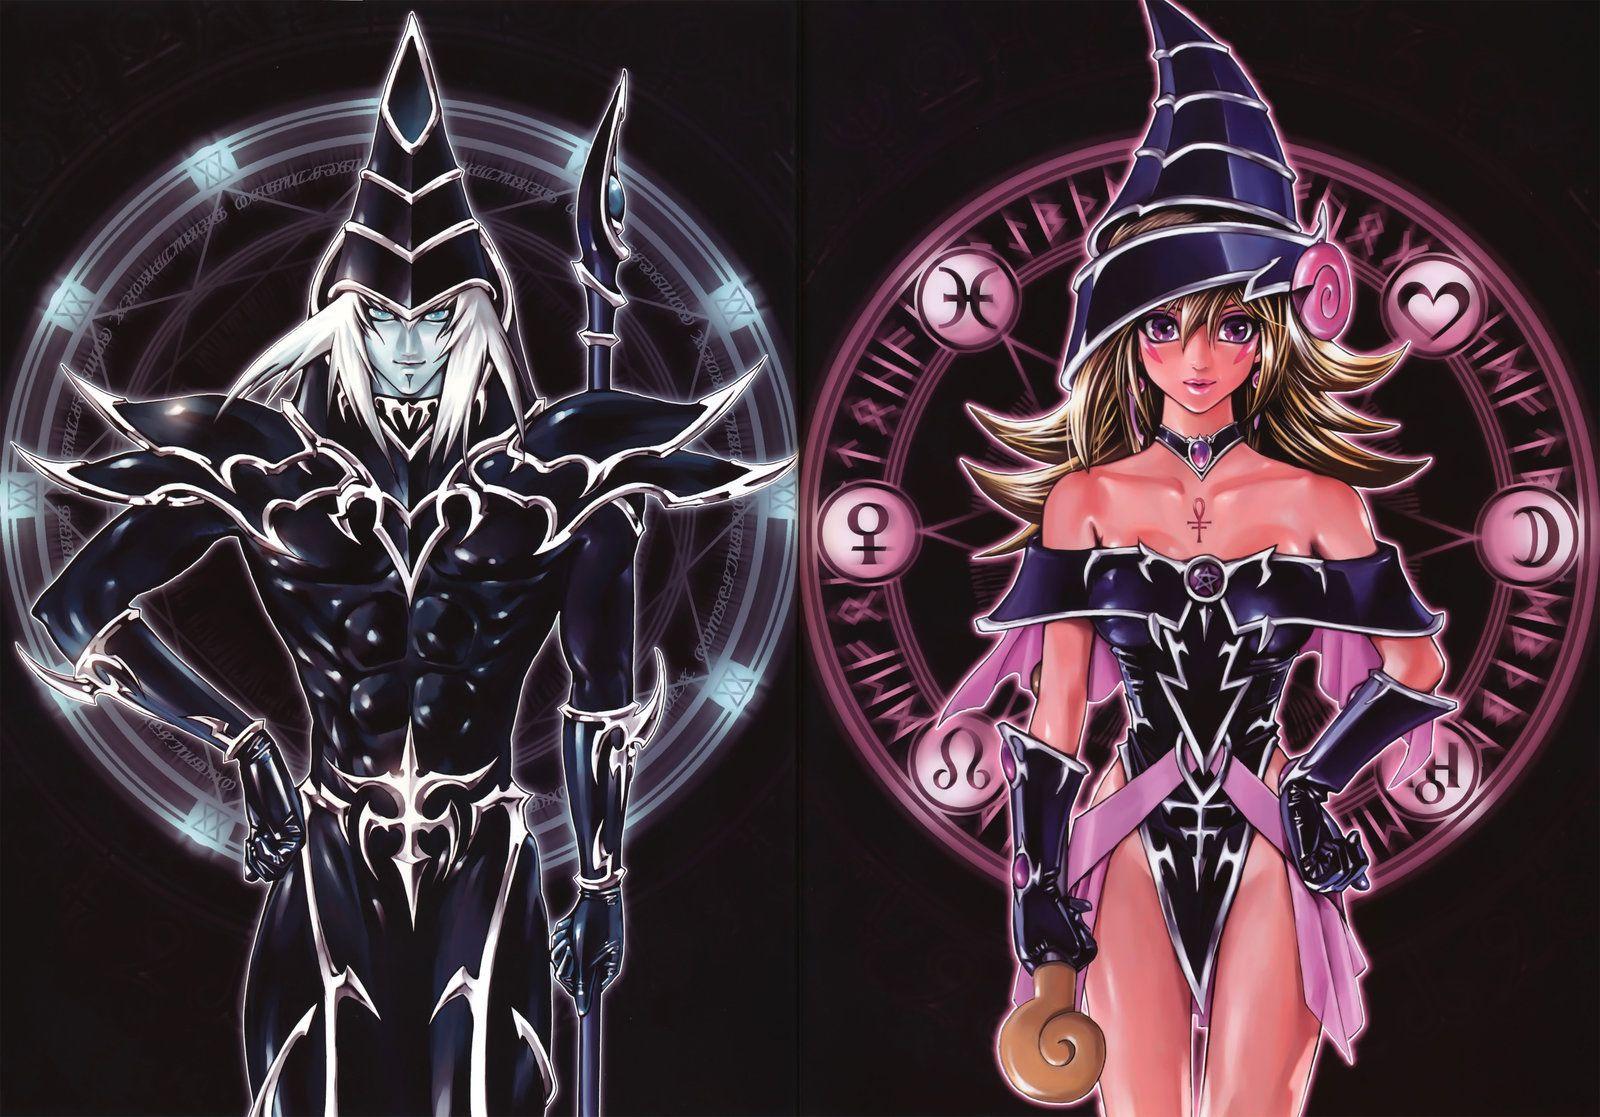 Dark Magician and Dark Magician Girl artwork by toailuong.